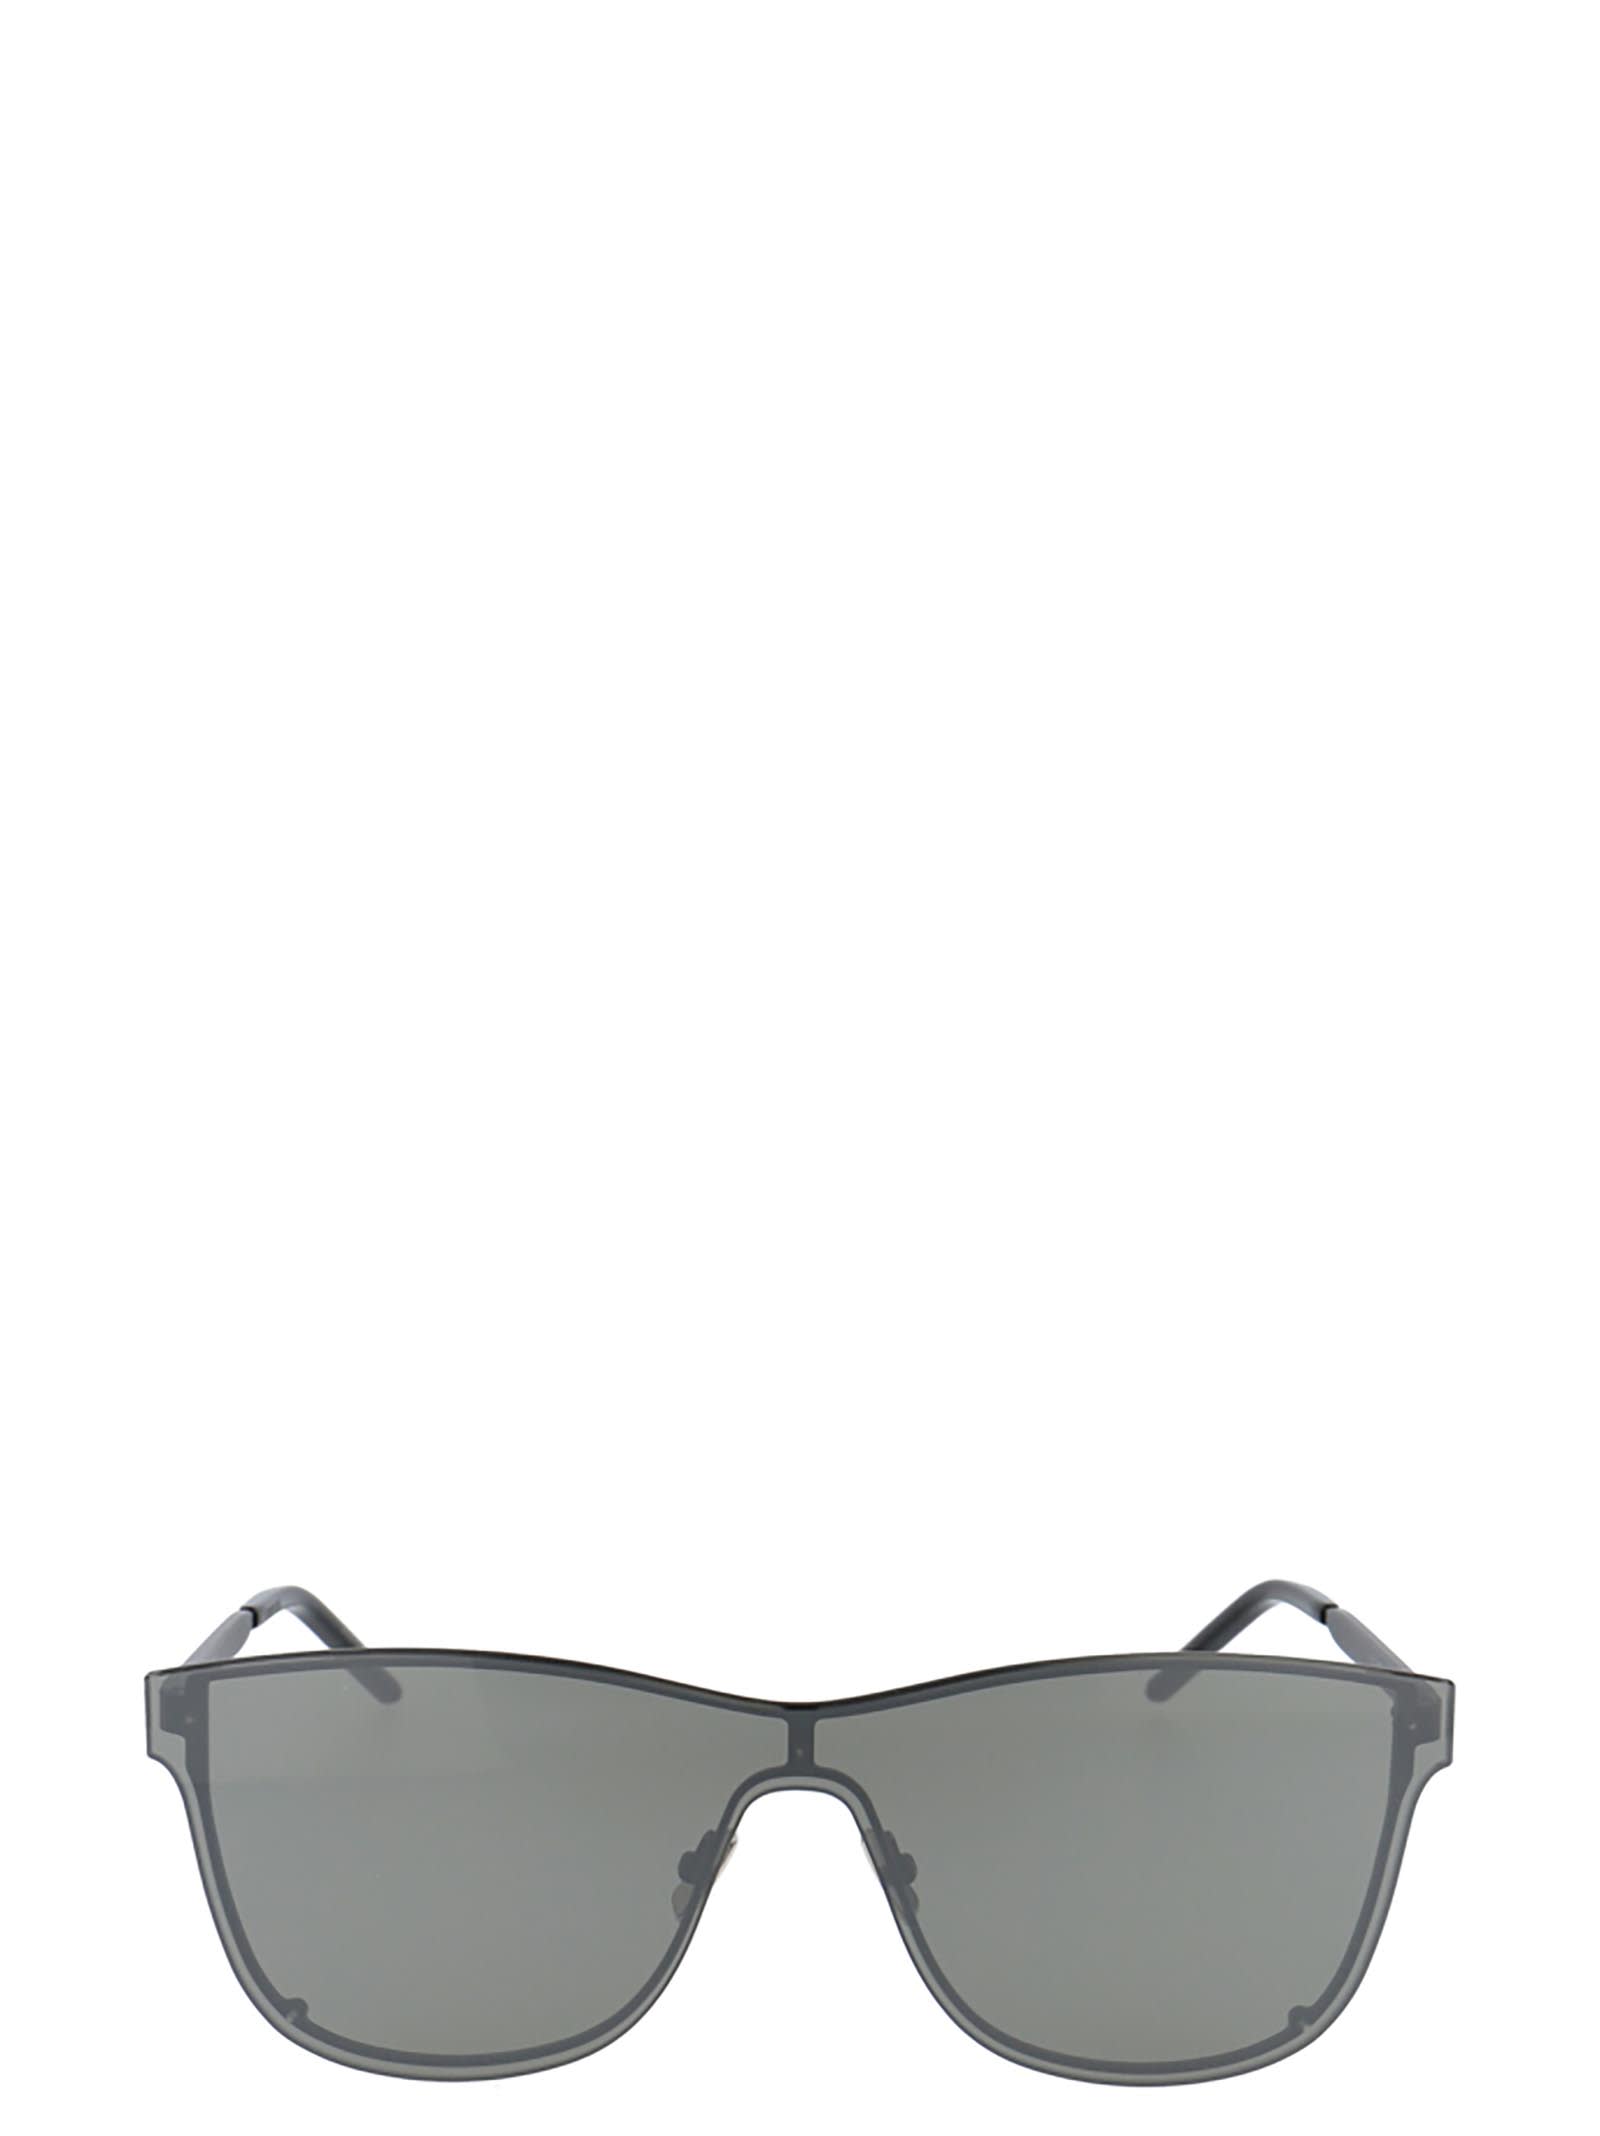 Saint Laurent Eyewear Saint Laurent Sl 51 Over Mask Black Sunglasses